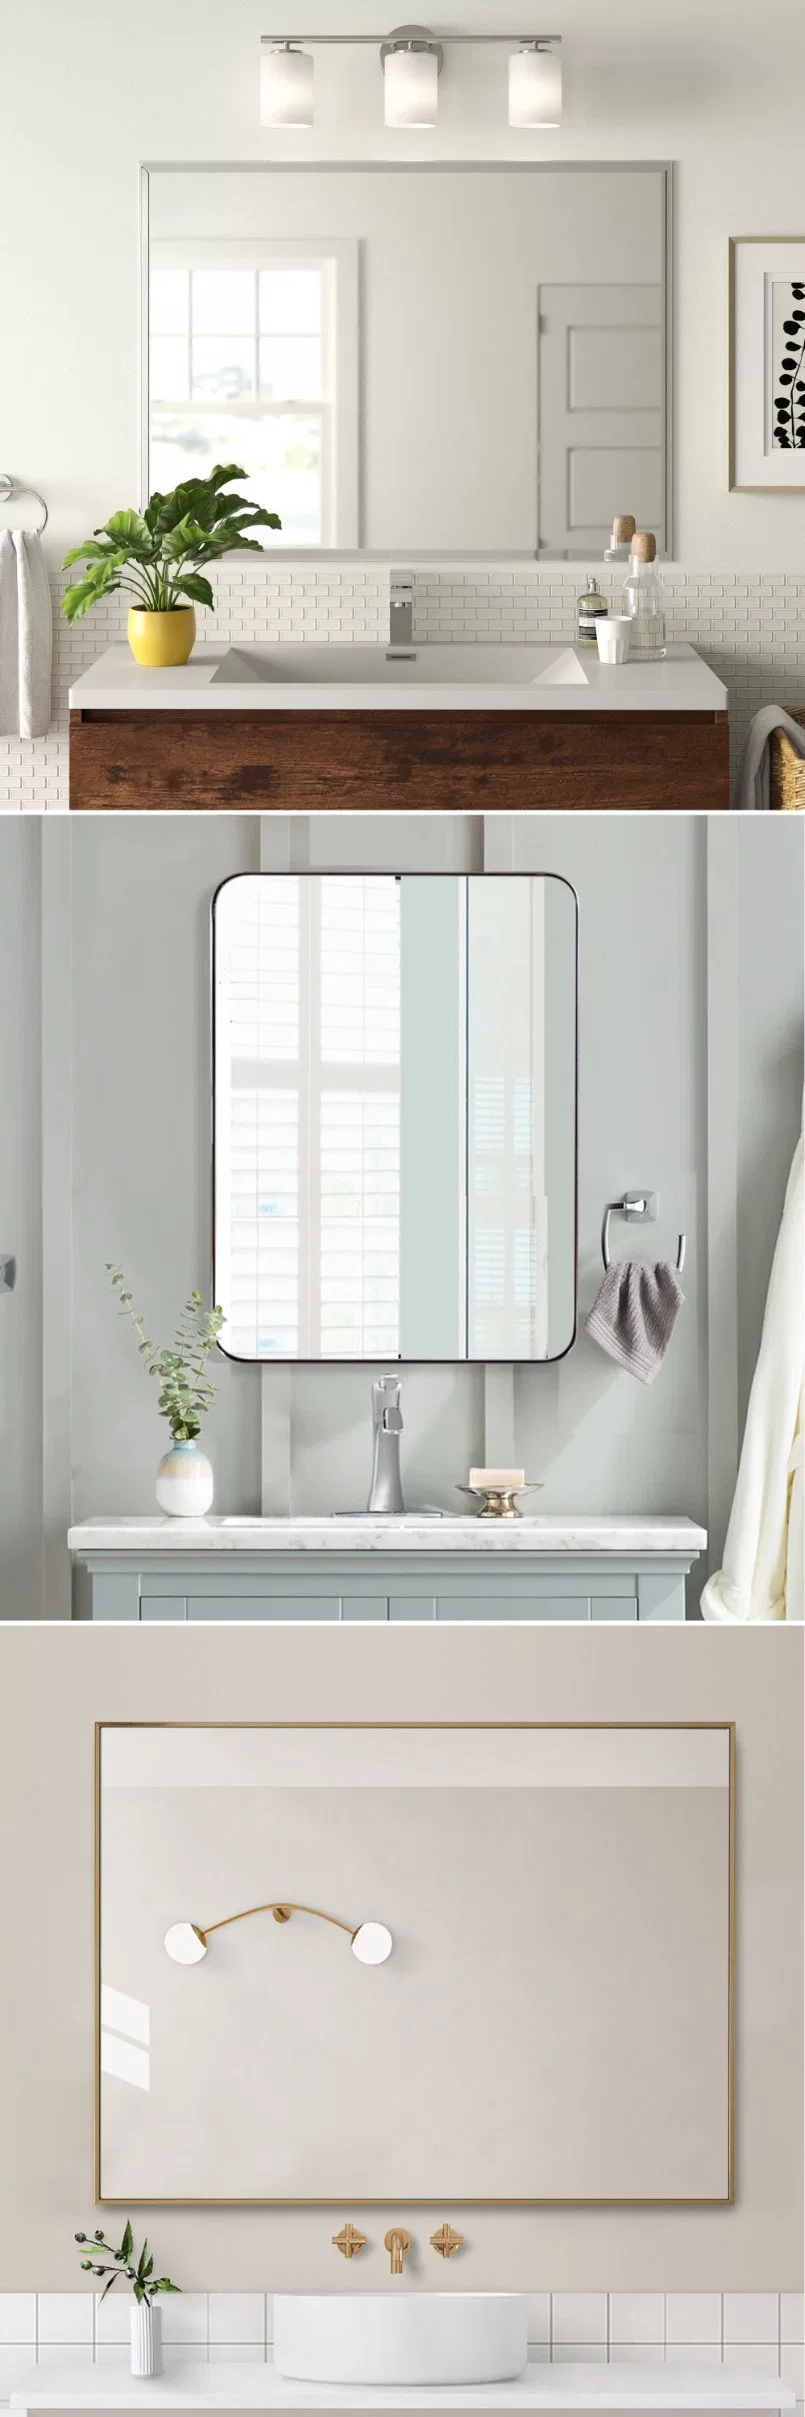 ORTONBATH New Design Matt Black Home Smart Wall Mounted Nonled Mirror Bathroom Designer Art Mirror with Steel Frame